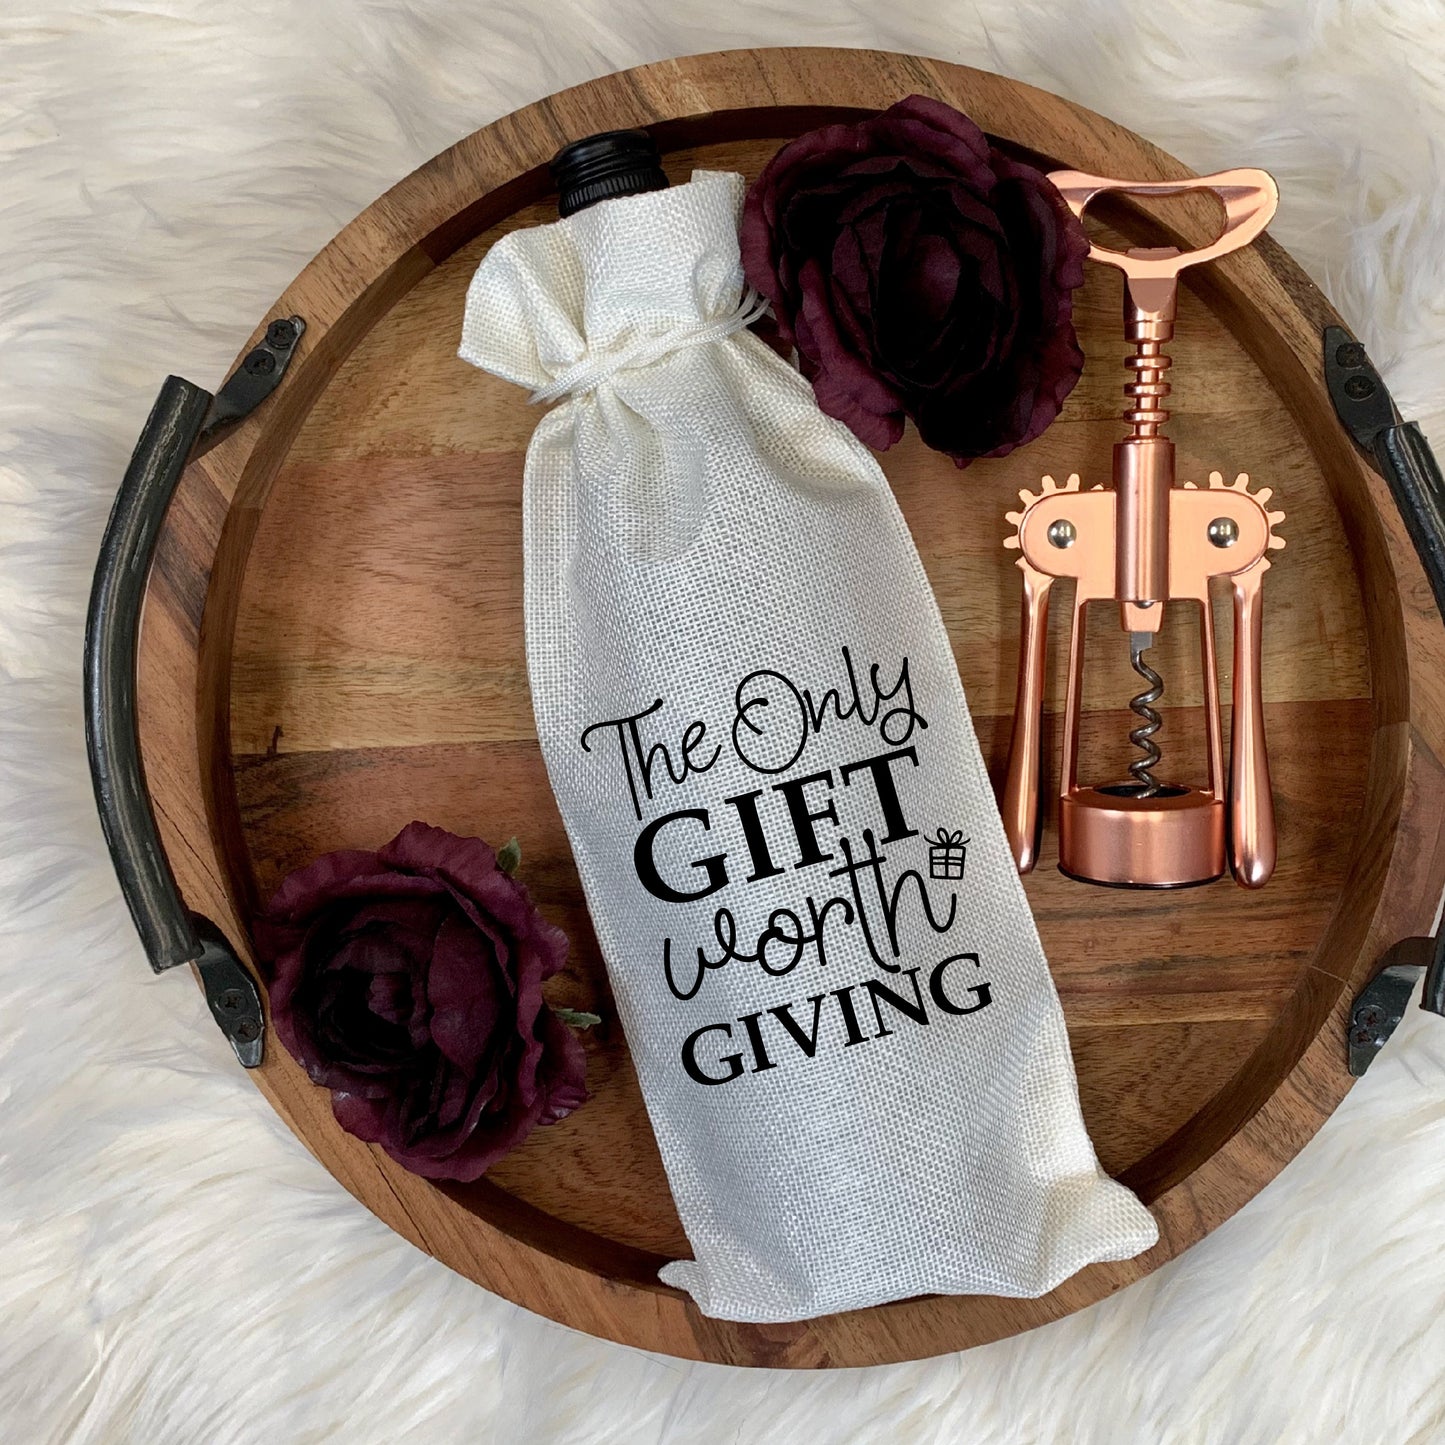 Fabulous custom "Only gift worth giving" burlap wine bags